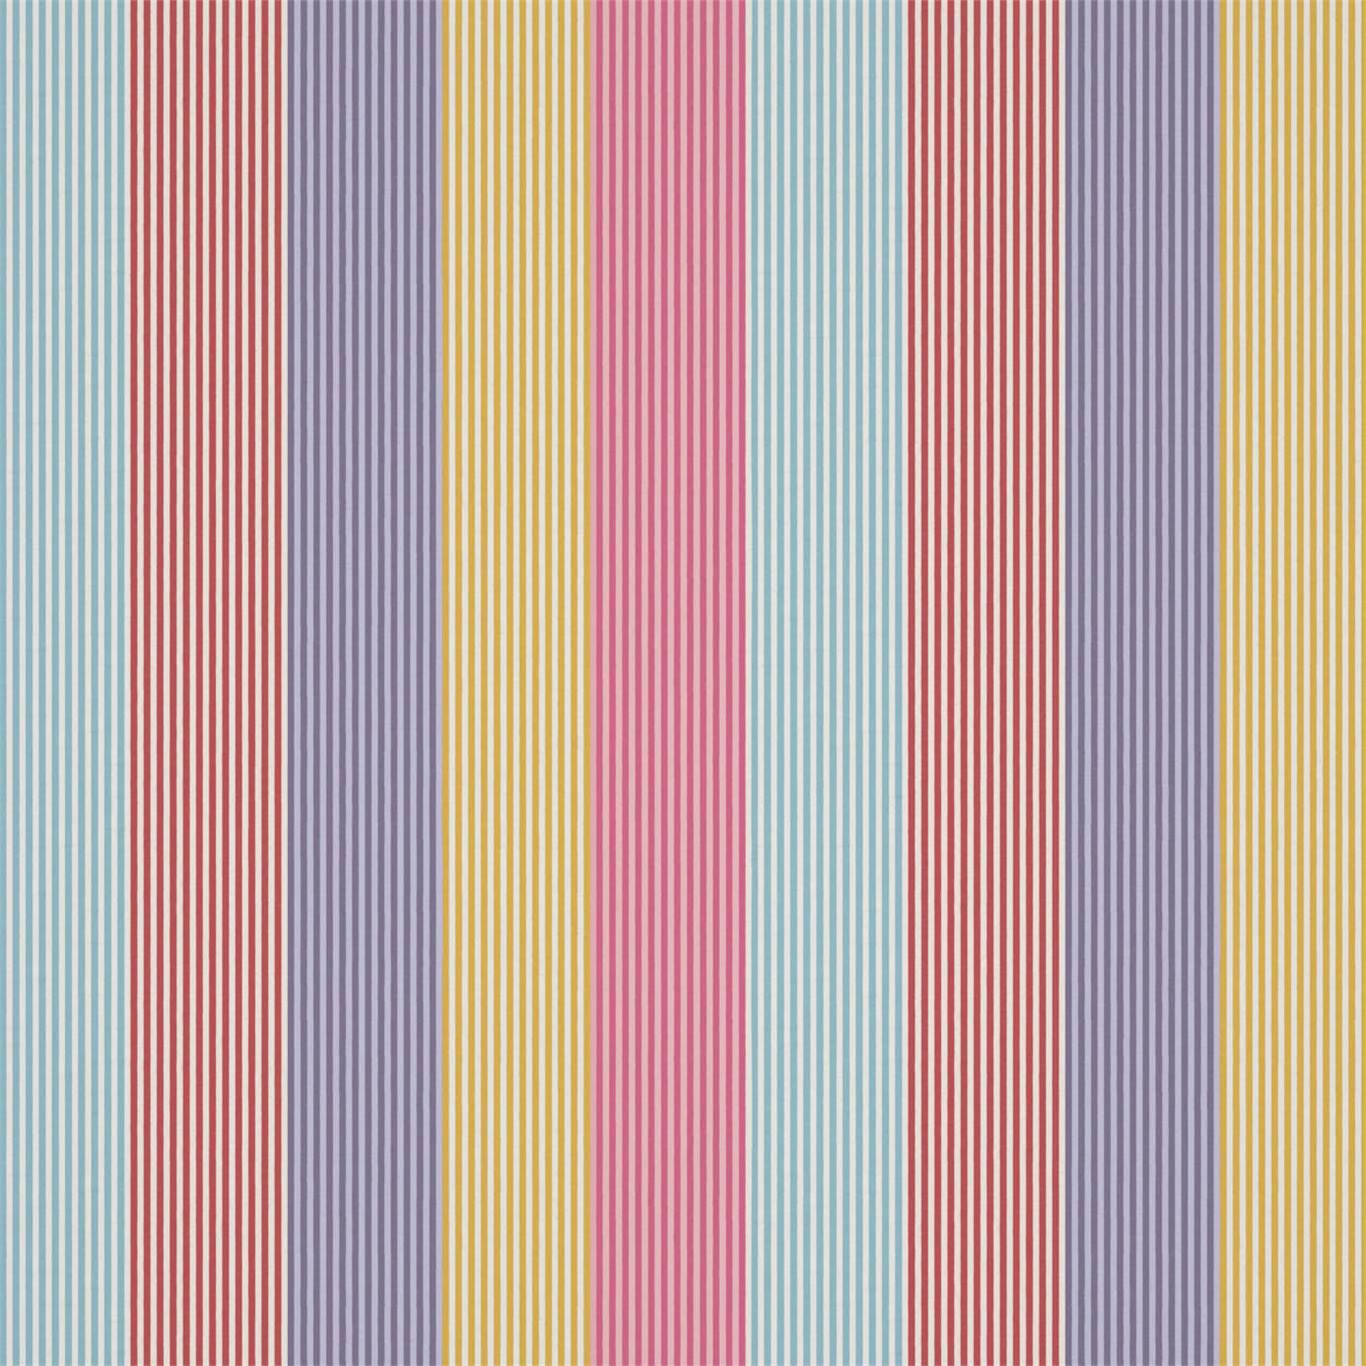 Funfair Stripe Grape/Cherry/Pineapple/Blossom Fabric by HAR